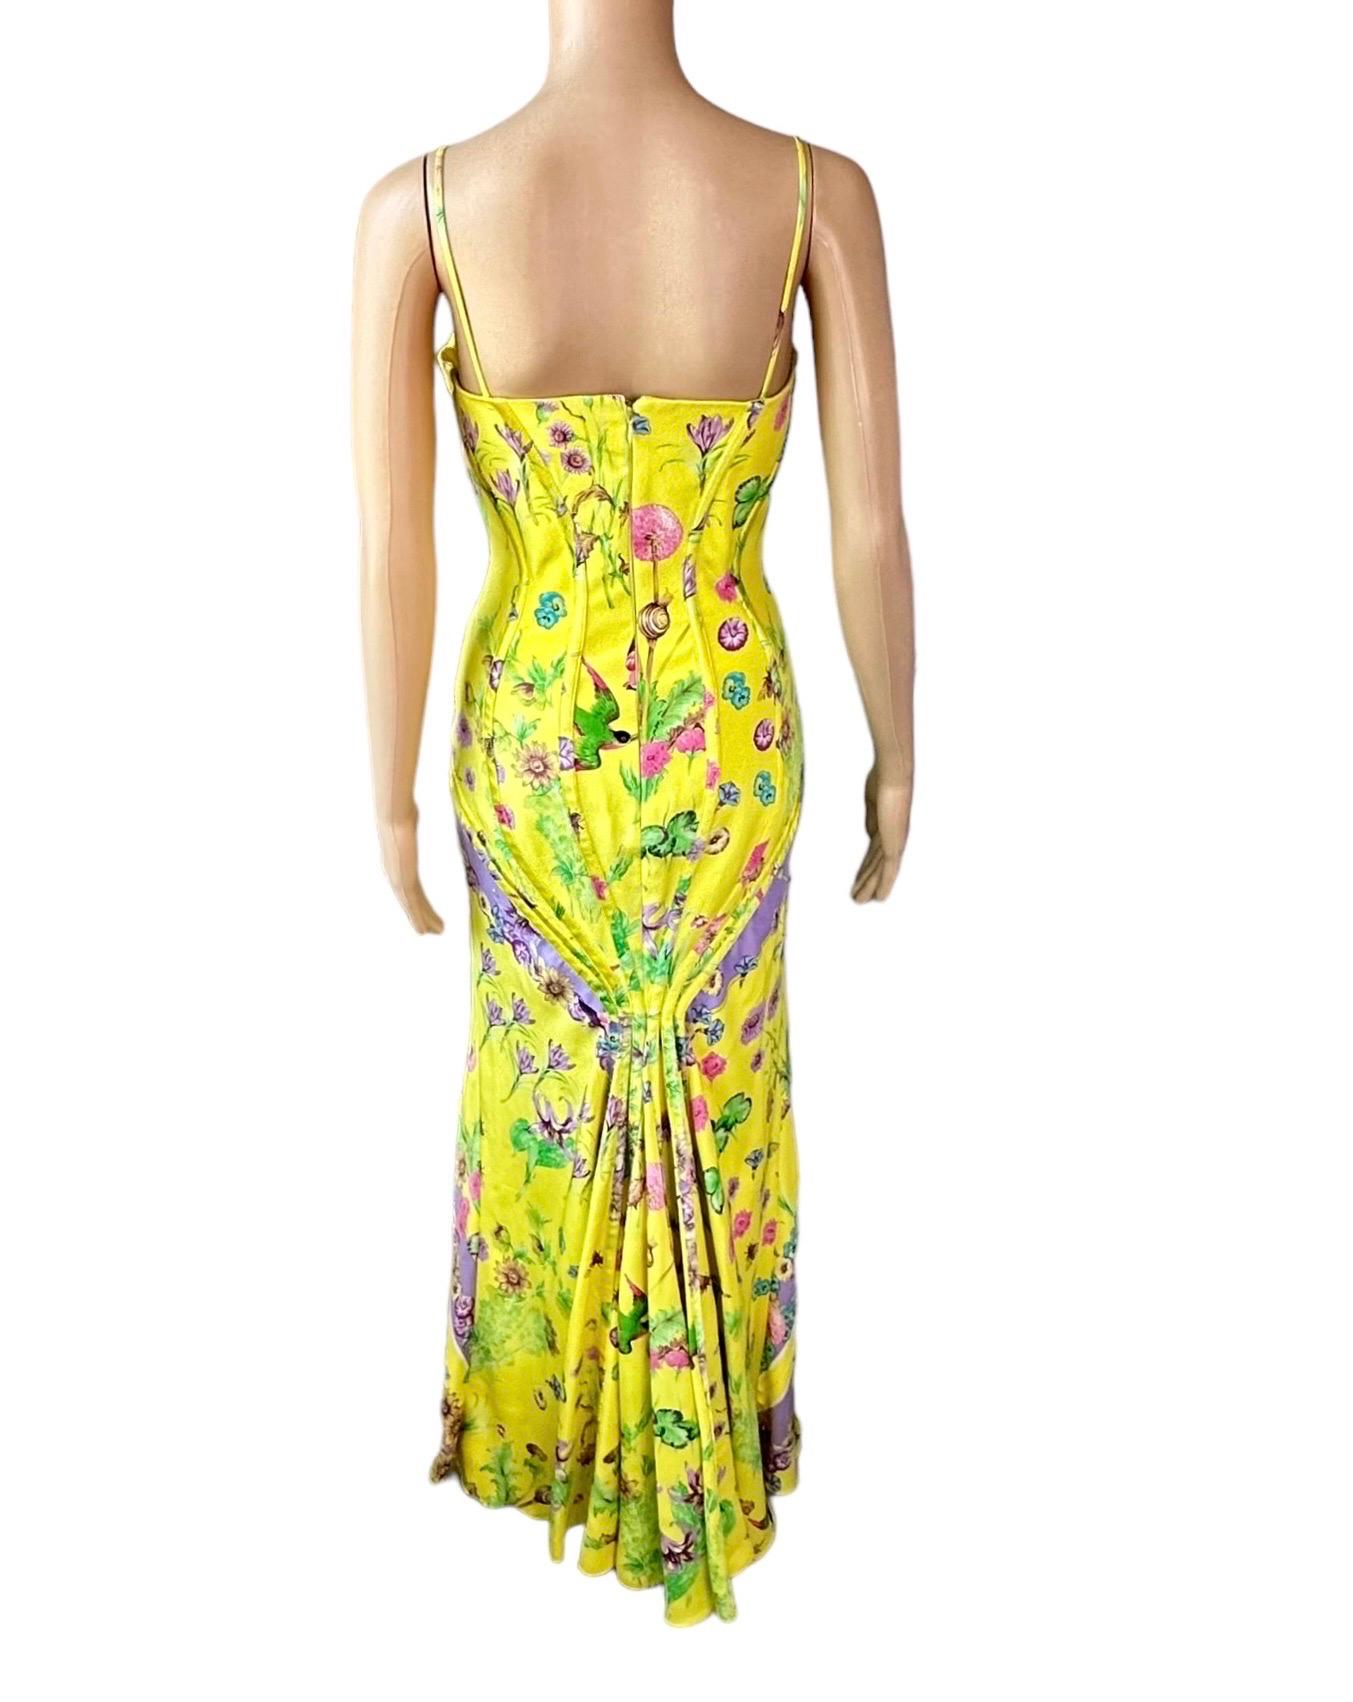 Versace S/S 2006 Bustier Corset Floral Print Evening Dress Gown 3